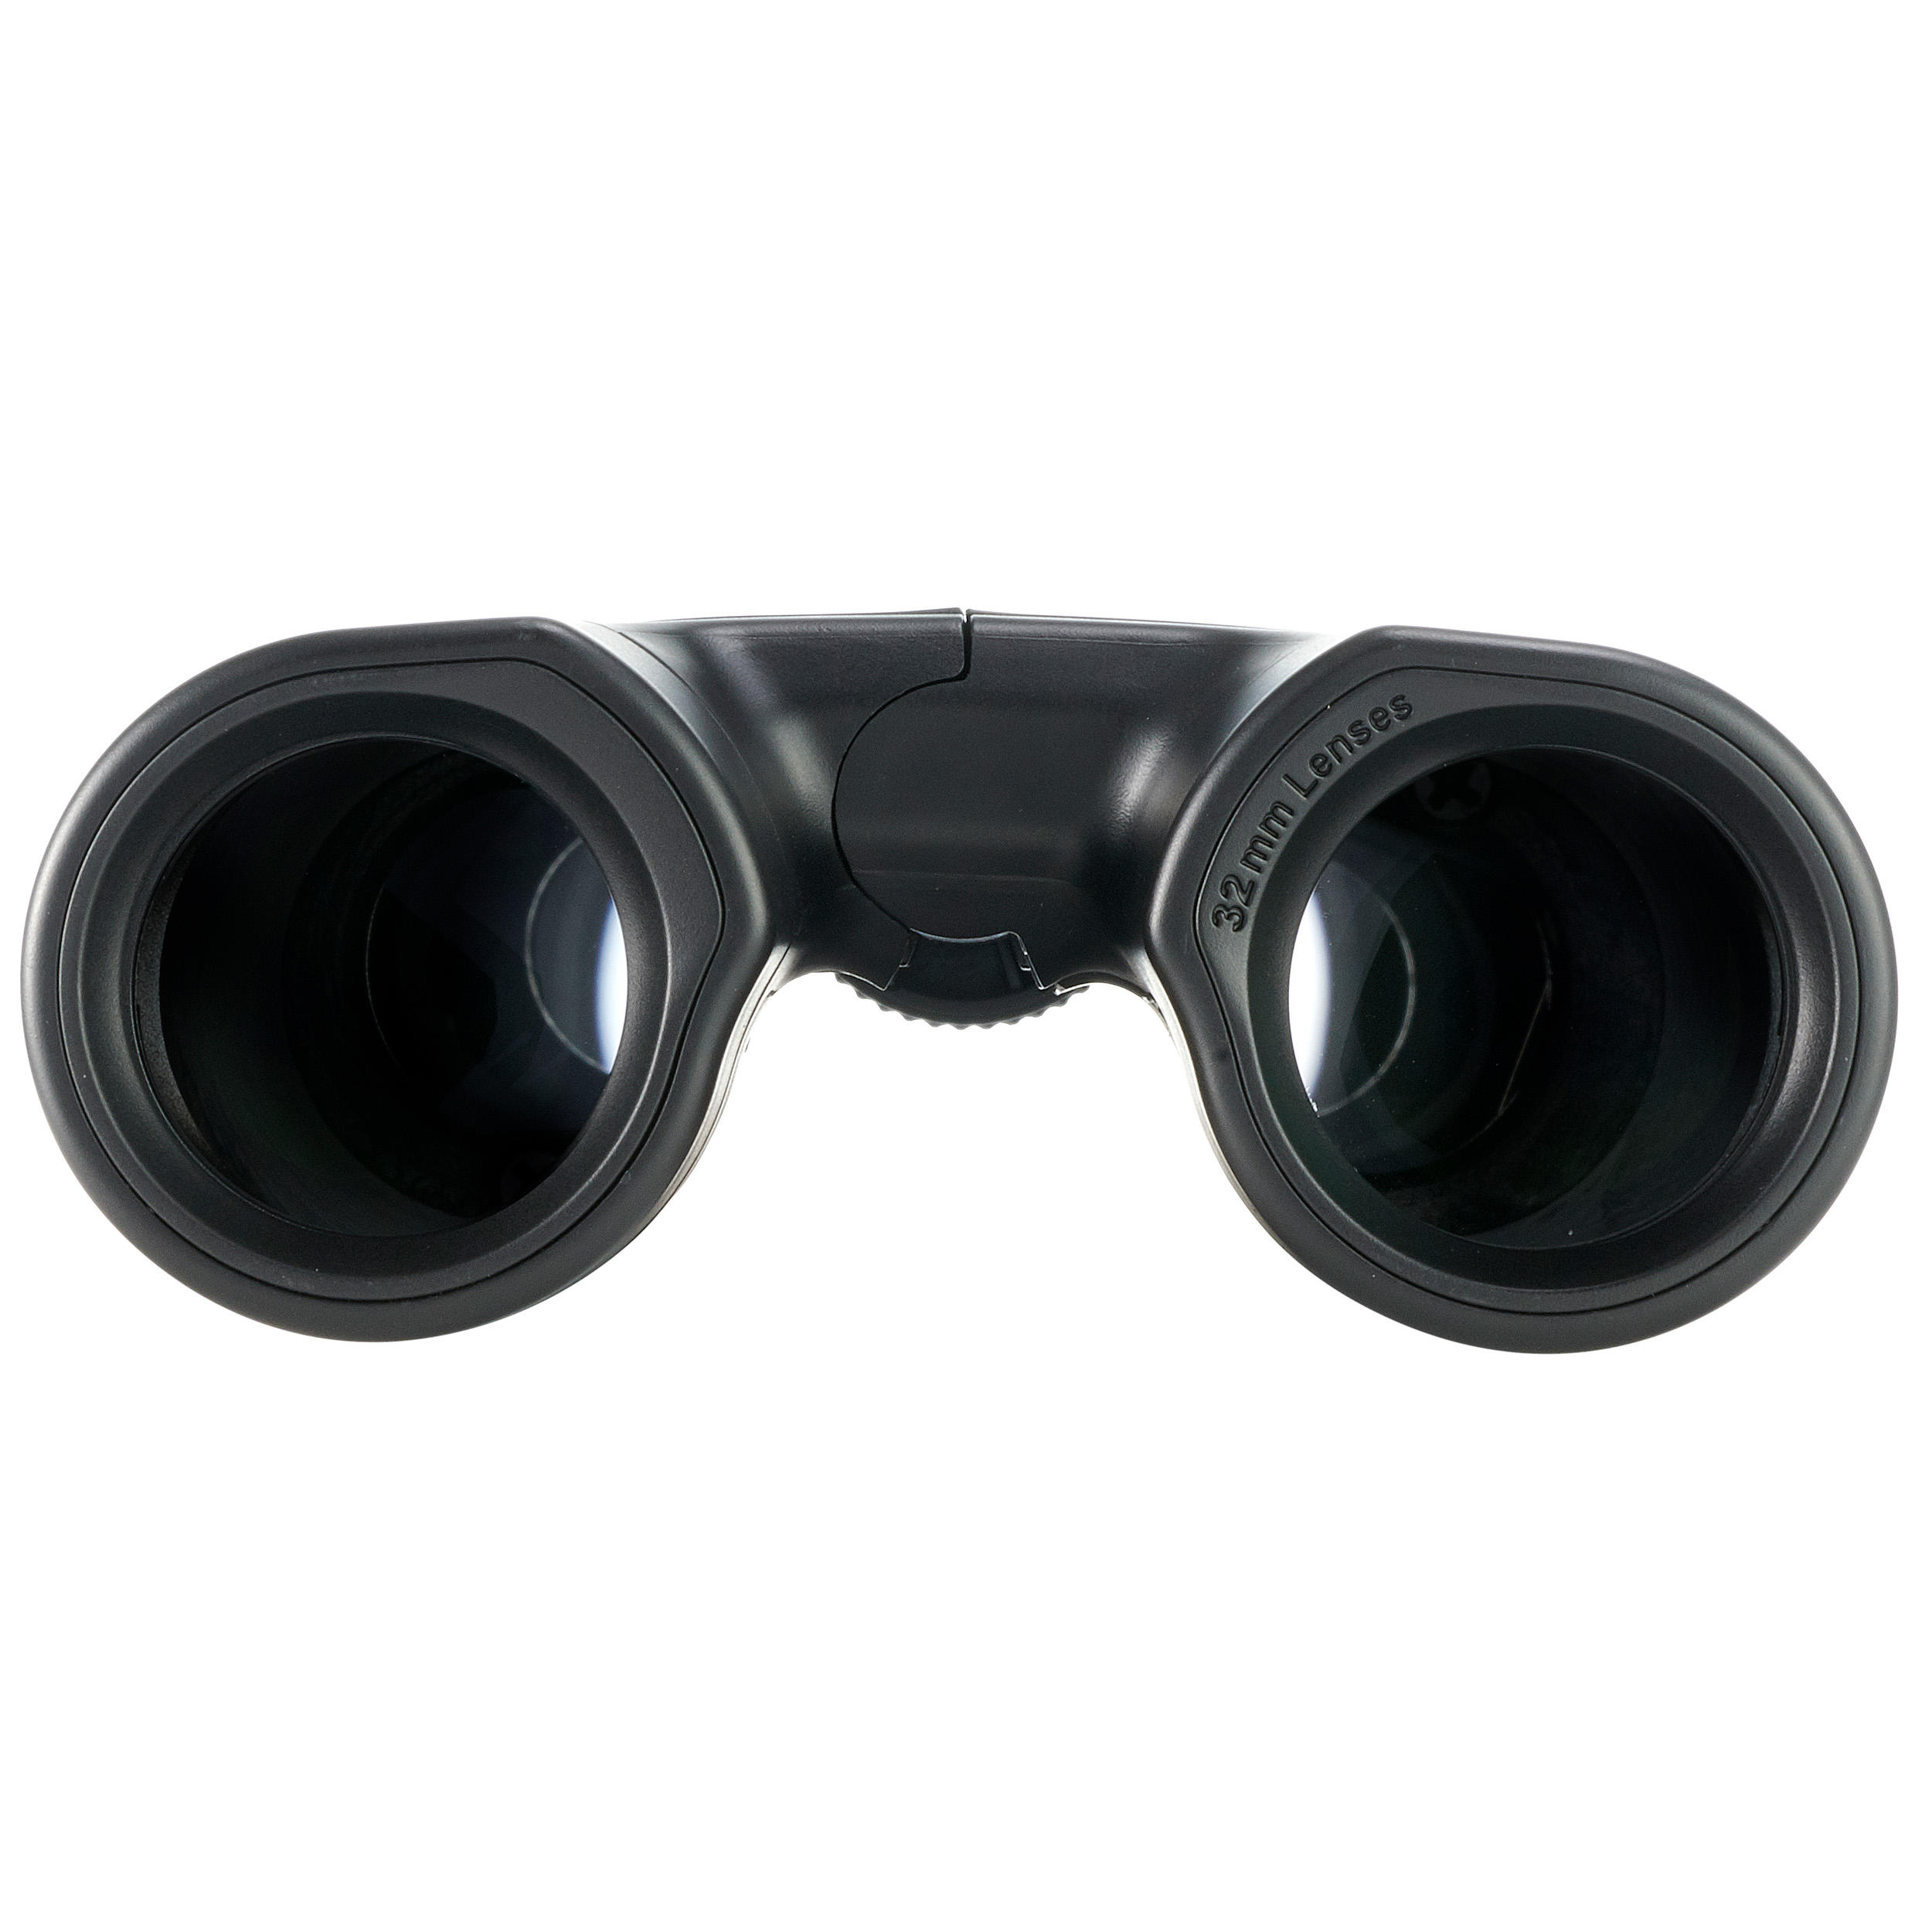 Adult Hiking binoculars with adjustment - MH B560 - x12 magnification - Black 6/10